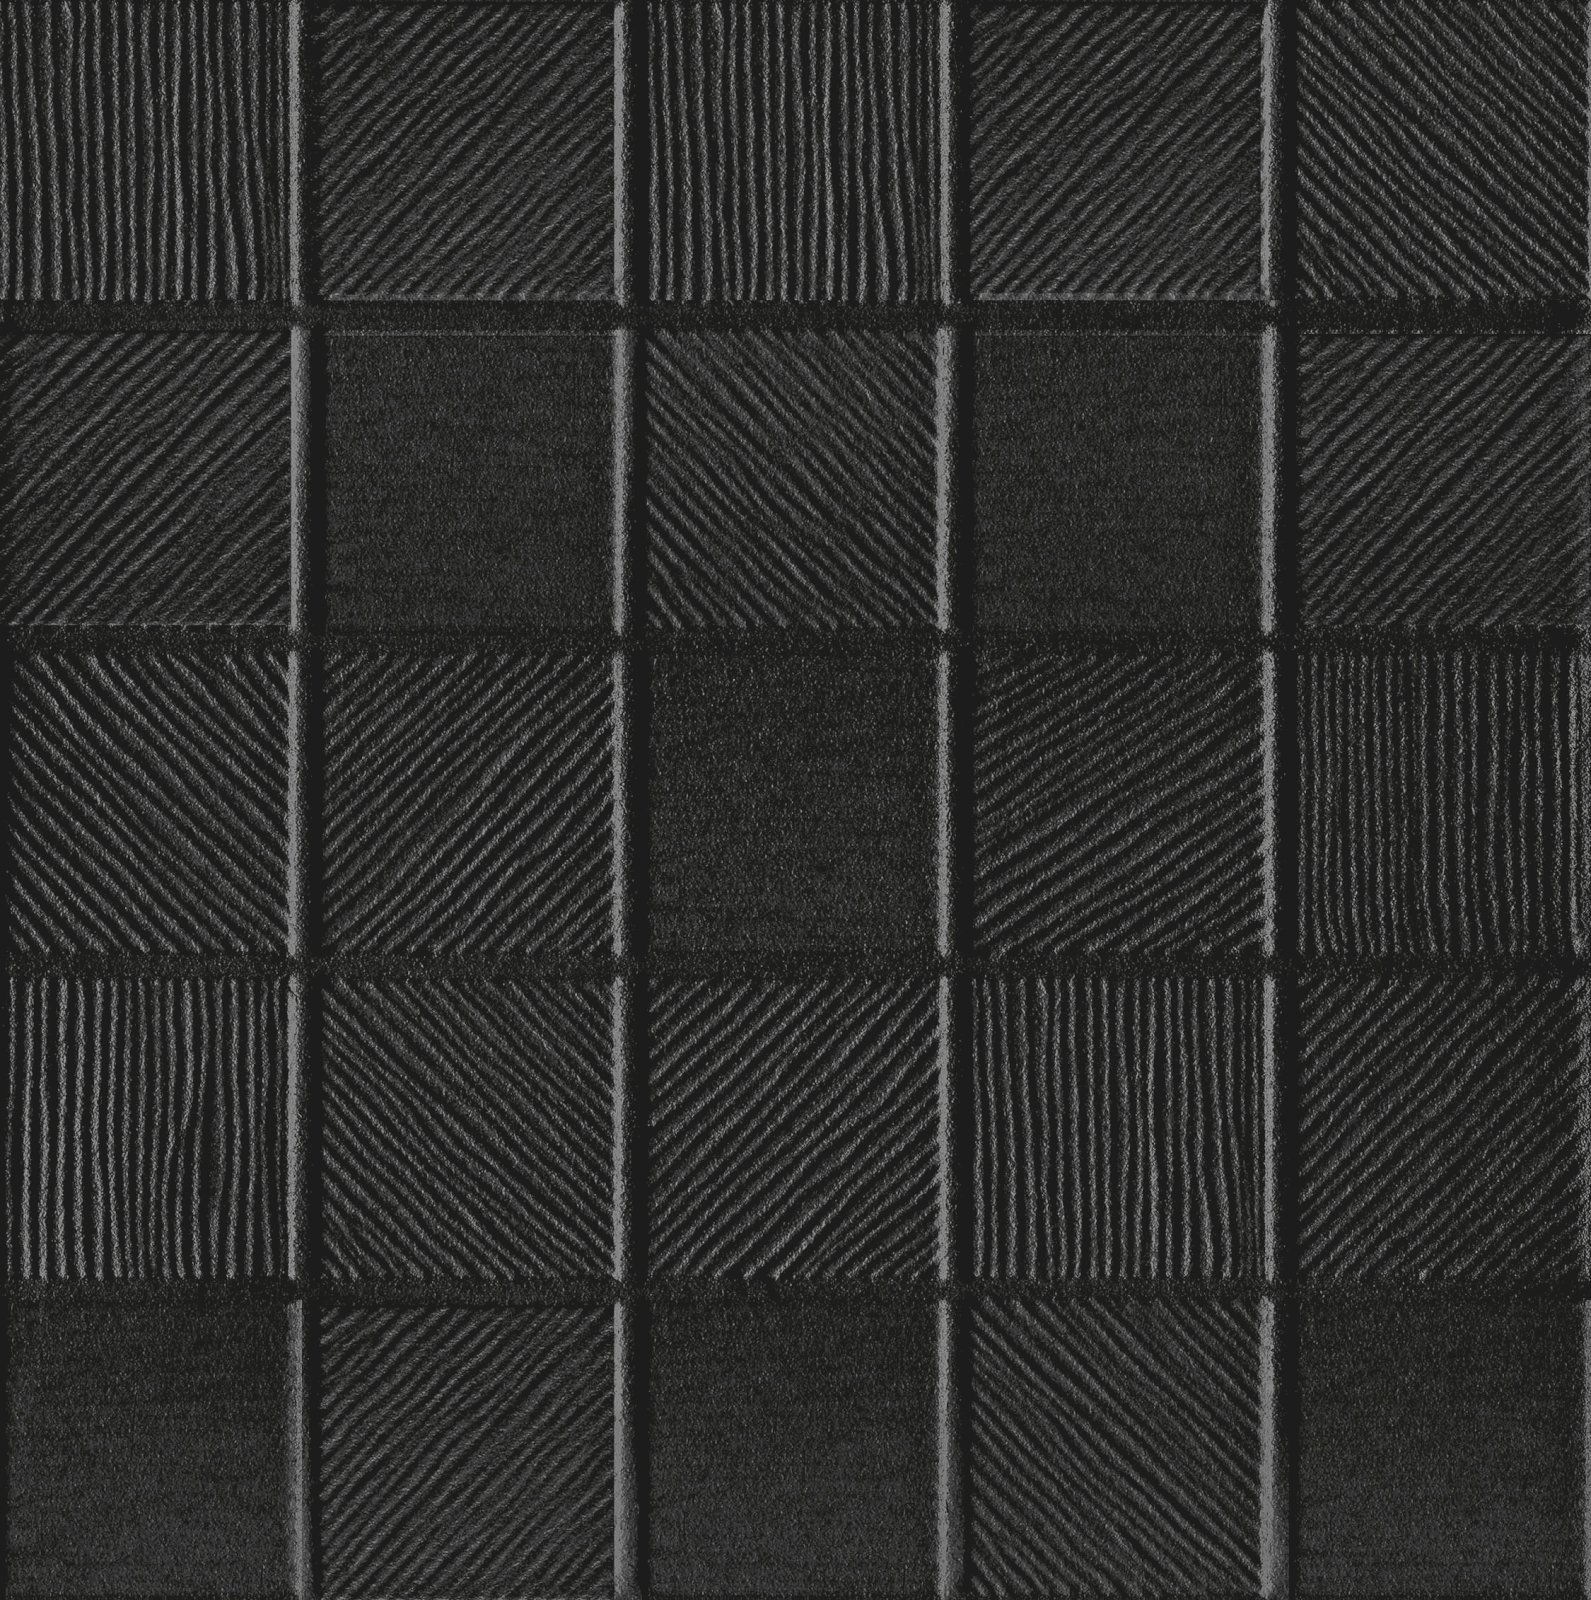 Platinum Ceramics Industry Product Alpha Black Bathroom tiles size 25x25